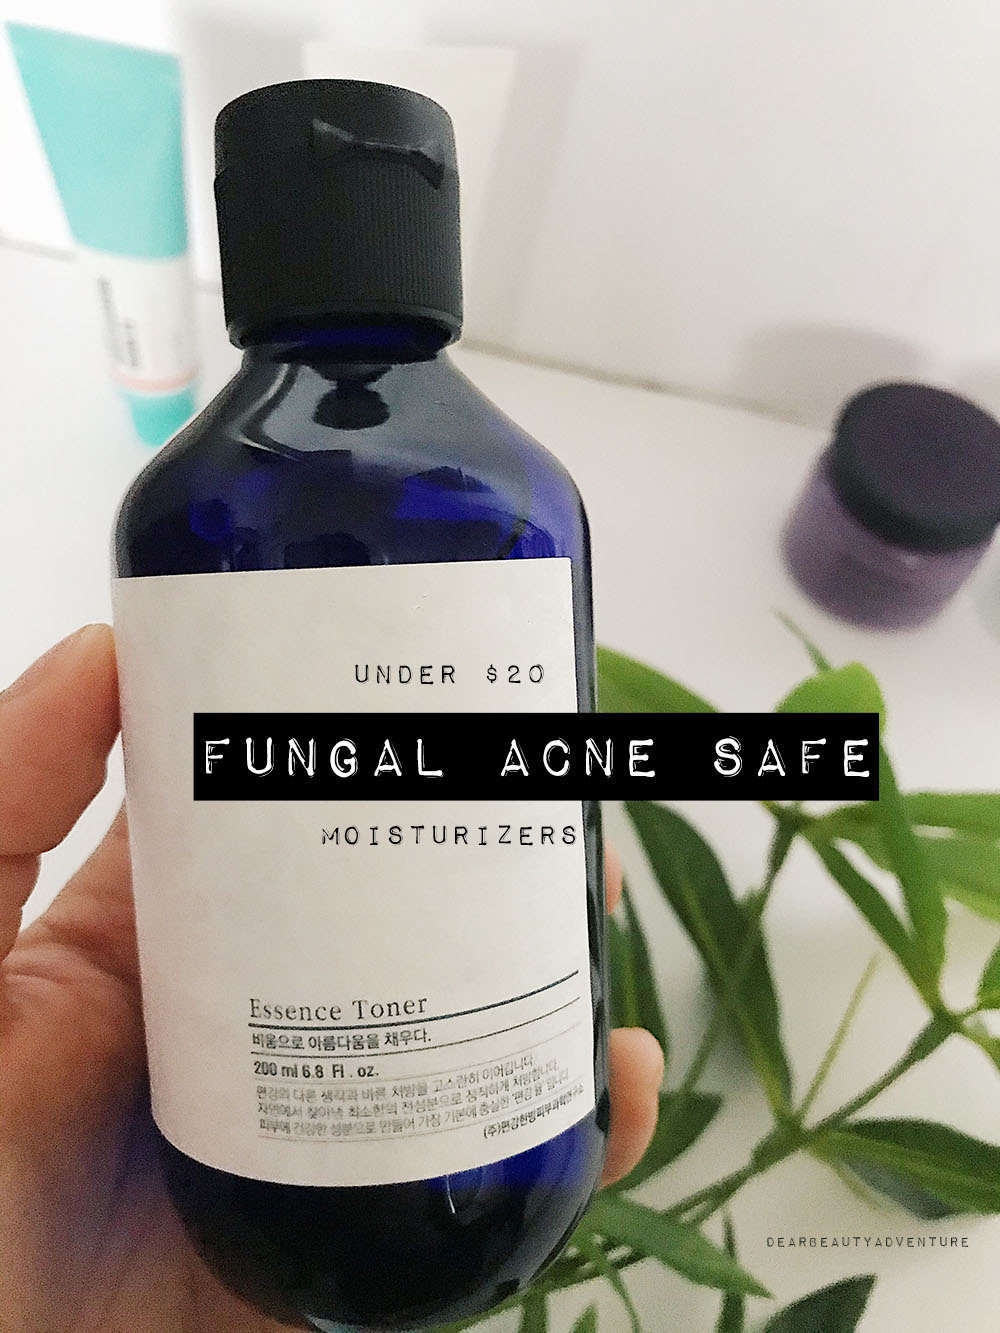 under $20 fungal acne safe moisturizer